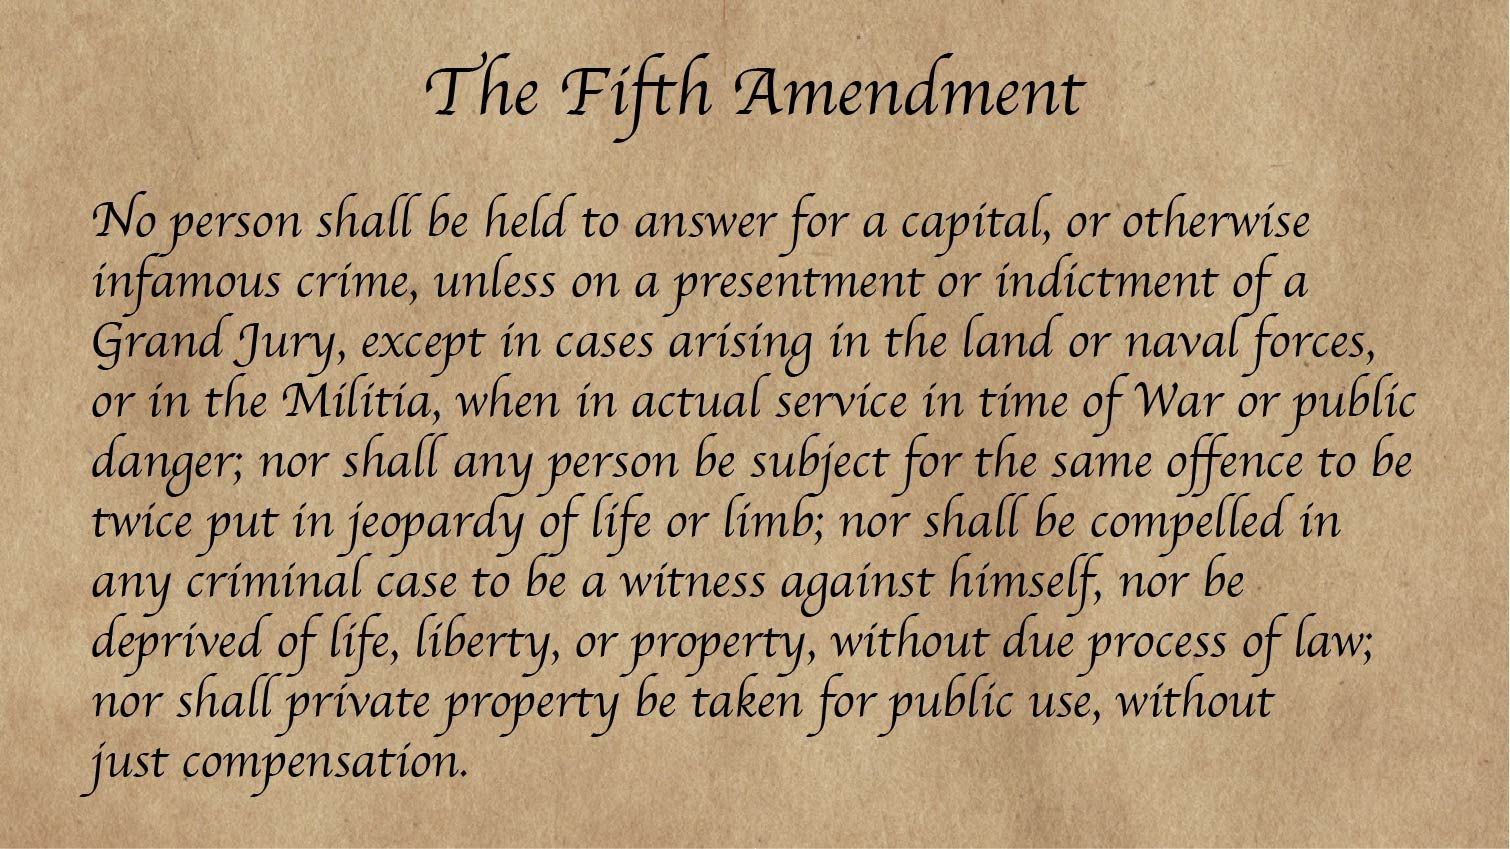 Language of the Fifth Amendment